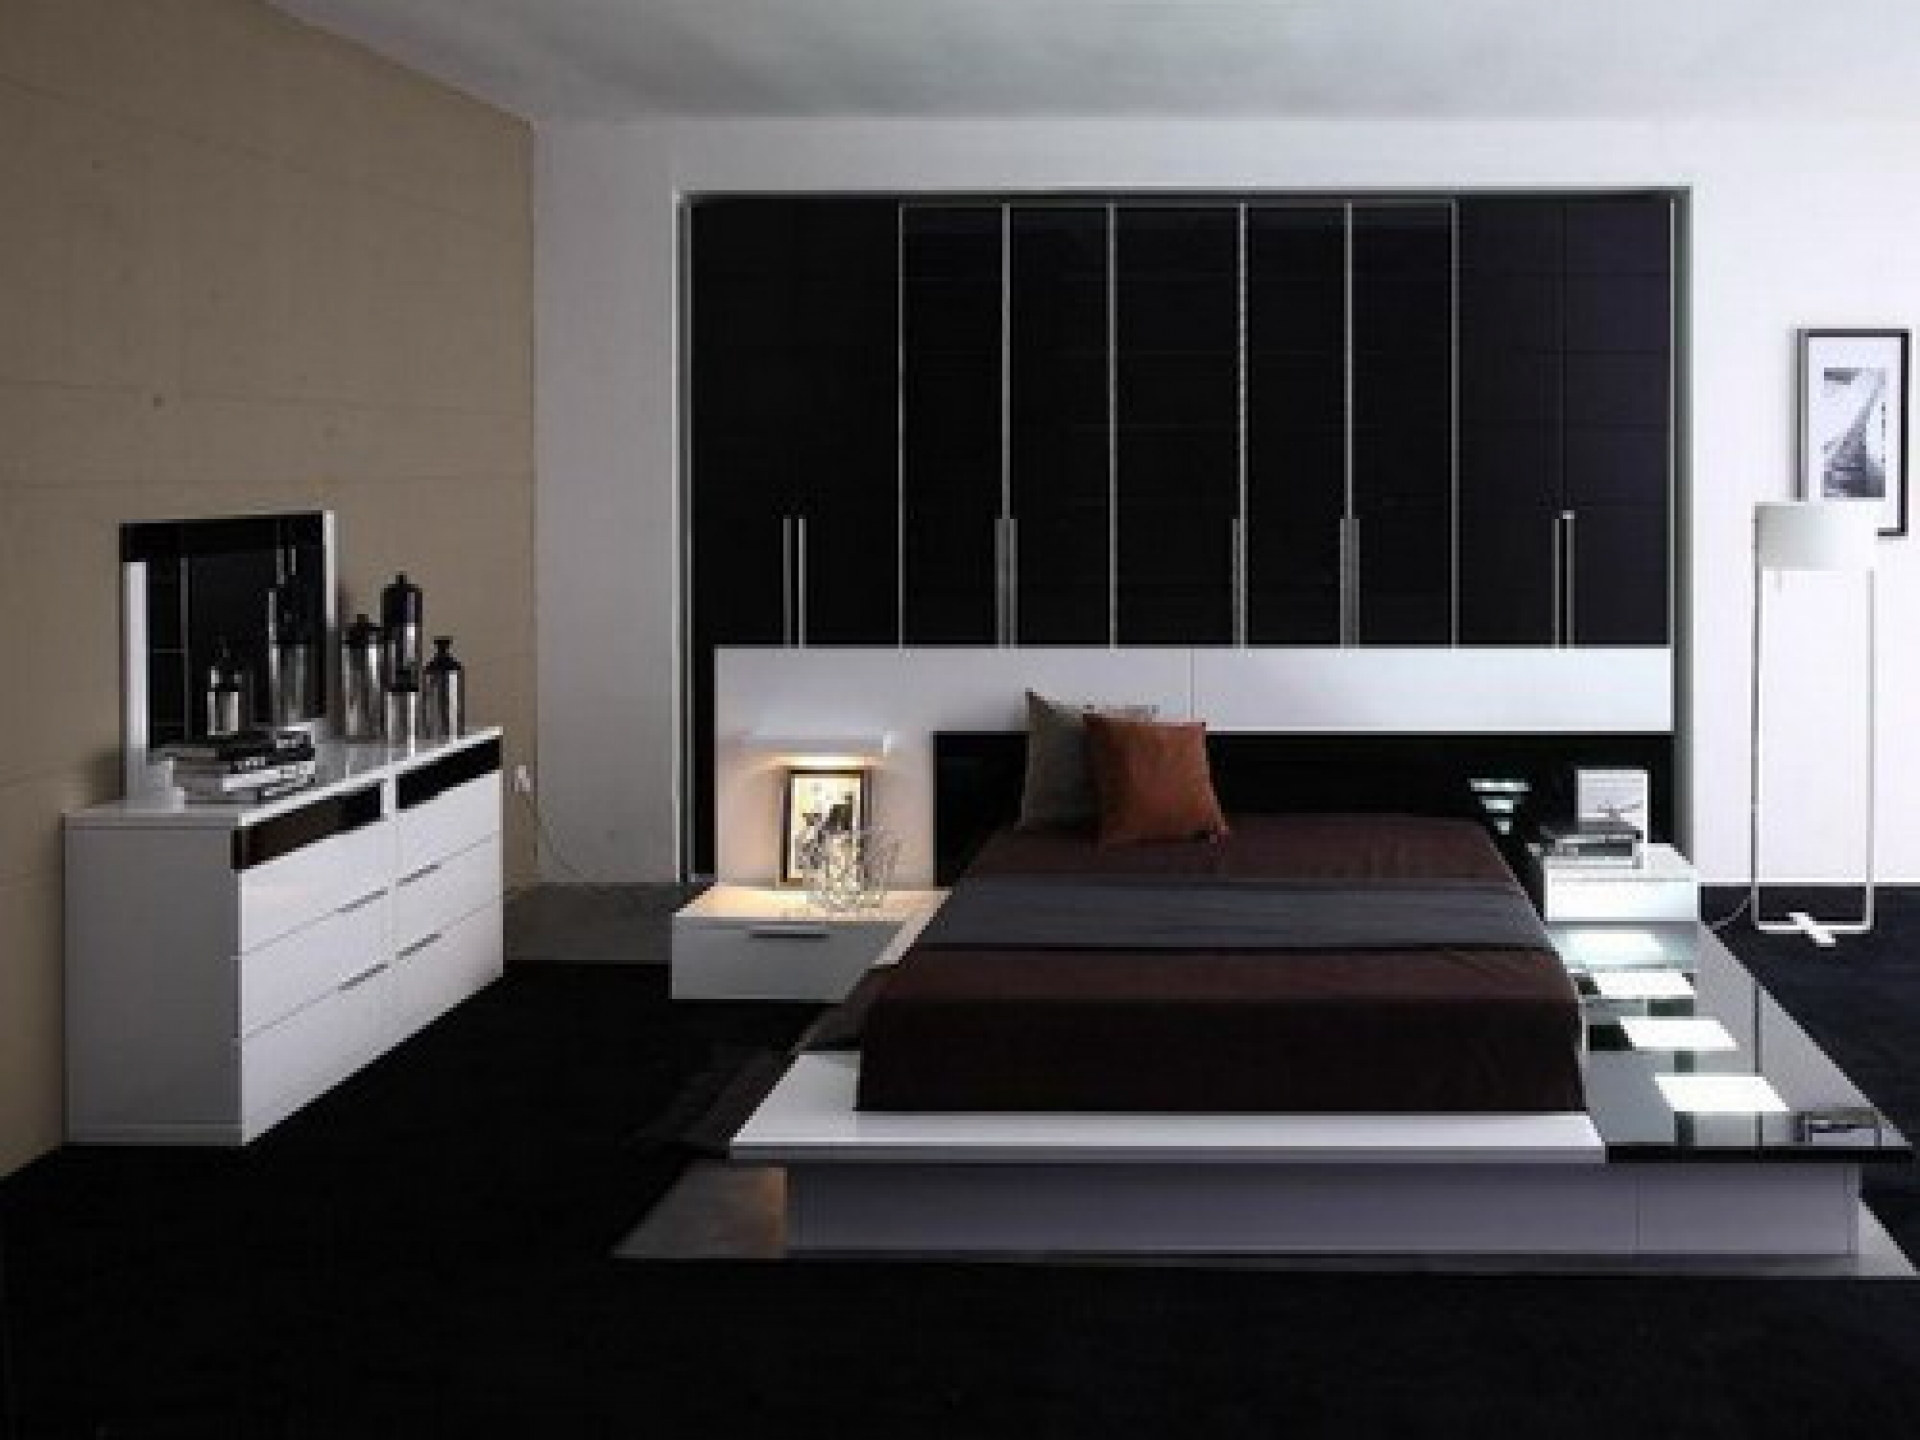 bedroom-simple-contemporary-bedroom-design-ideas-2015-with-picturesque-bedroom-interior-decorating-ideas-contemporary-bedroom-design-ideas-2015-bedroom-set-furniture-kids-bedroom-interior